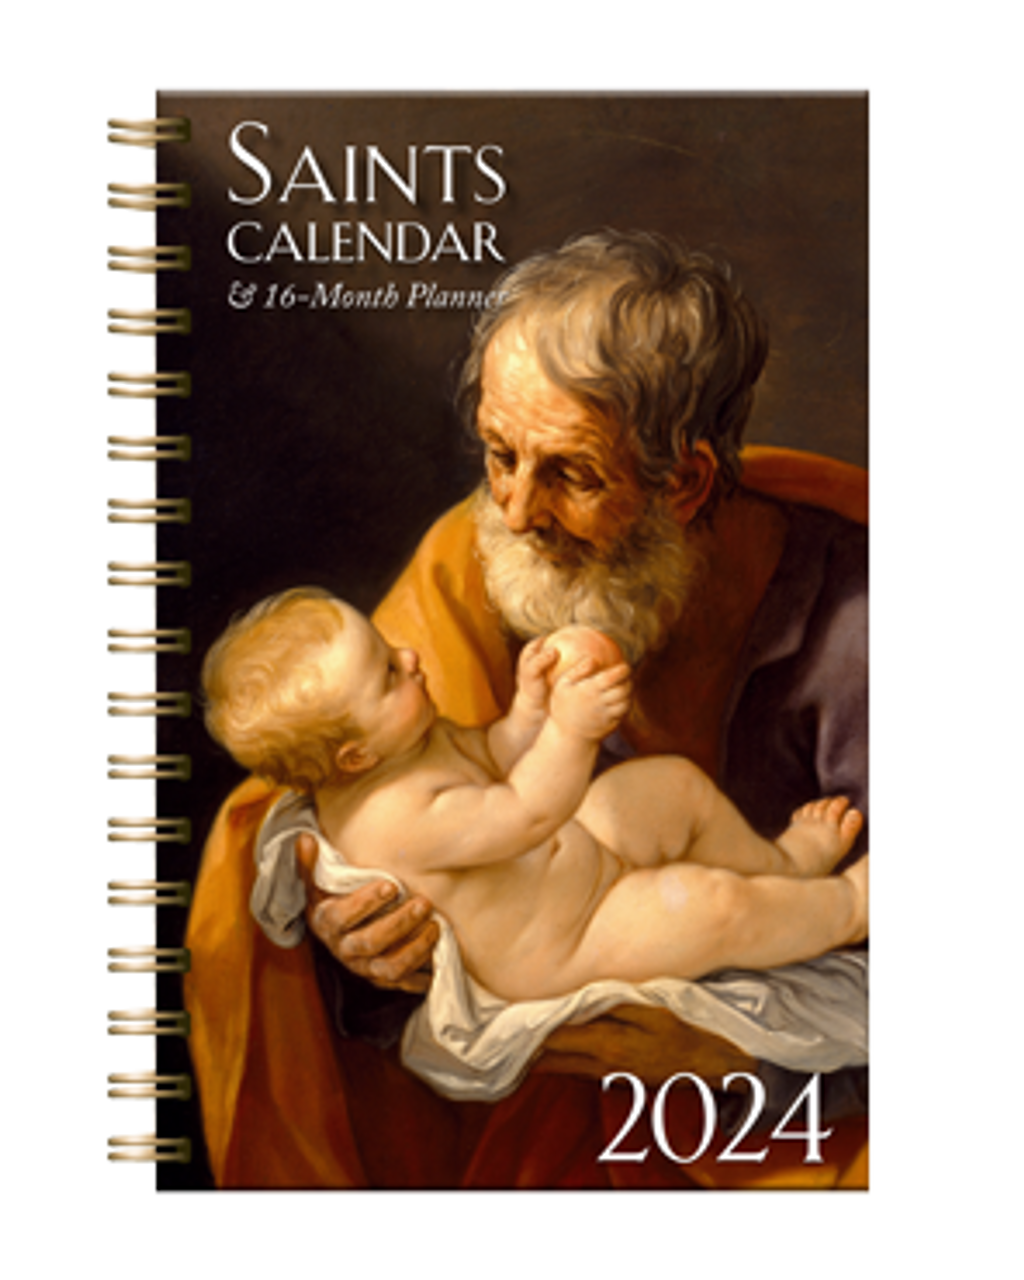 Saints Catholic Calendar & 16 Month Daily Planner 2024 Spiral Bound